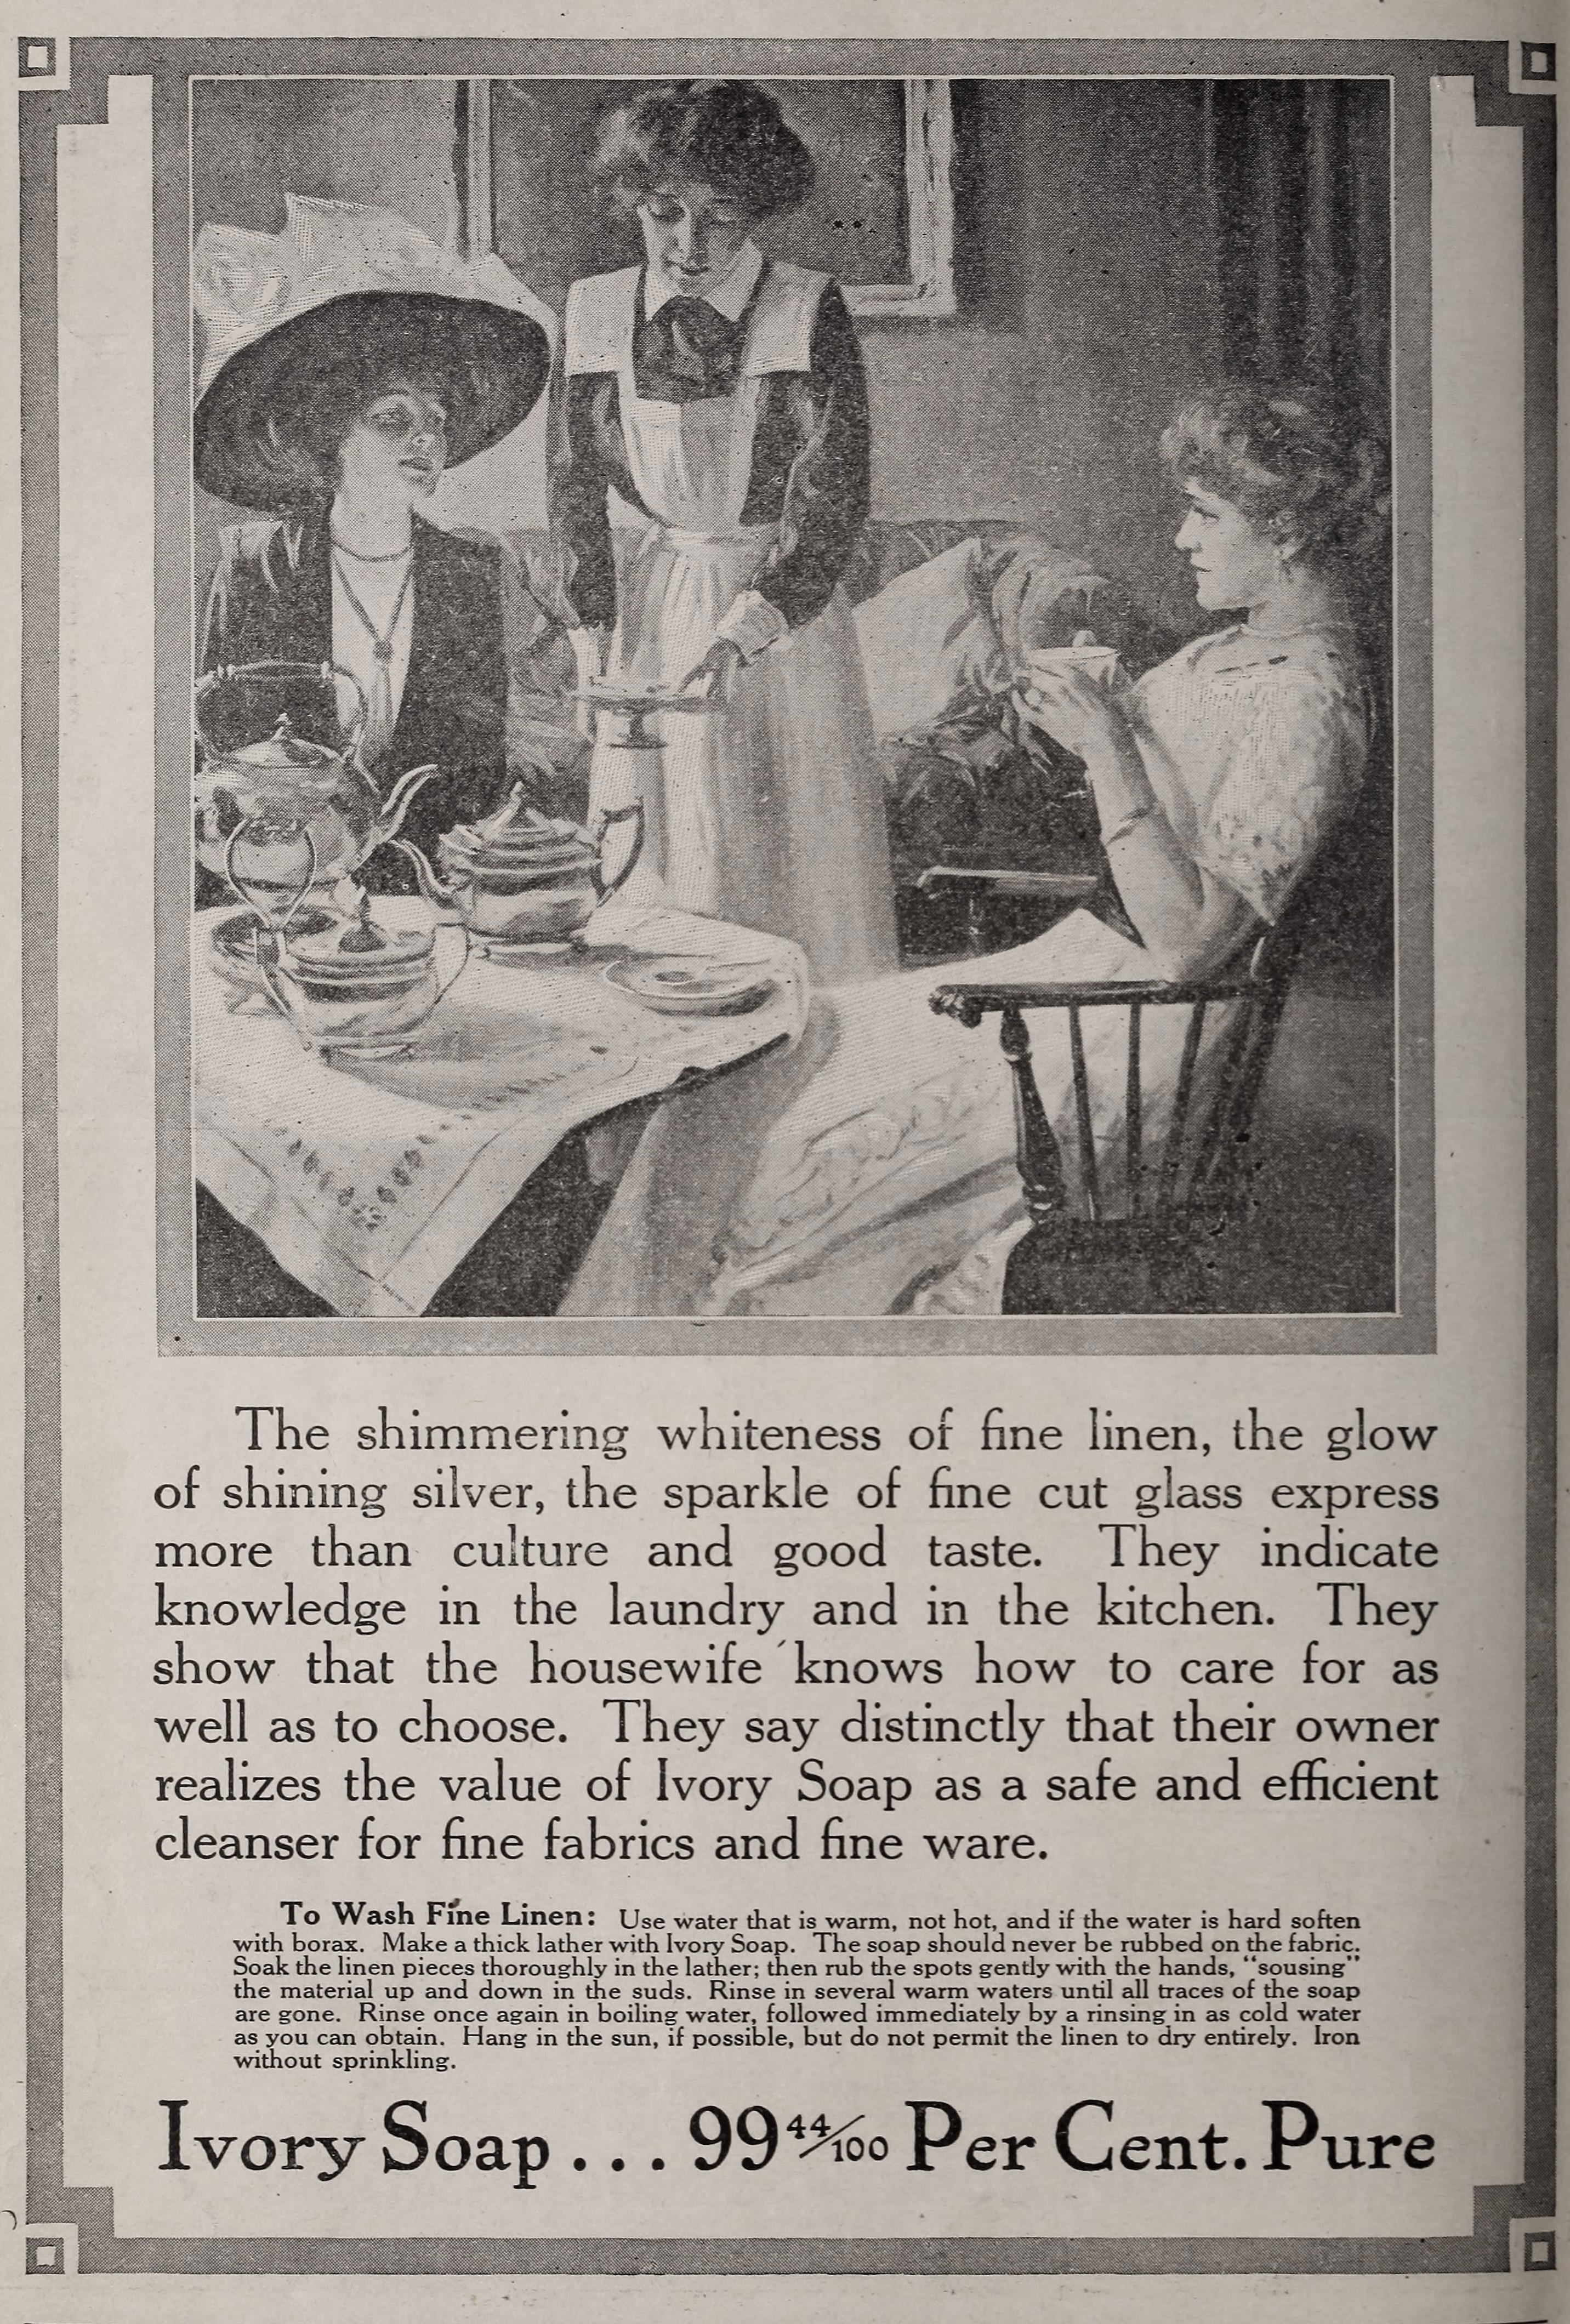 Ivory Soap Ad 1900 - Linen Tip With Two Women Having Tea Scene